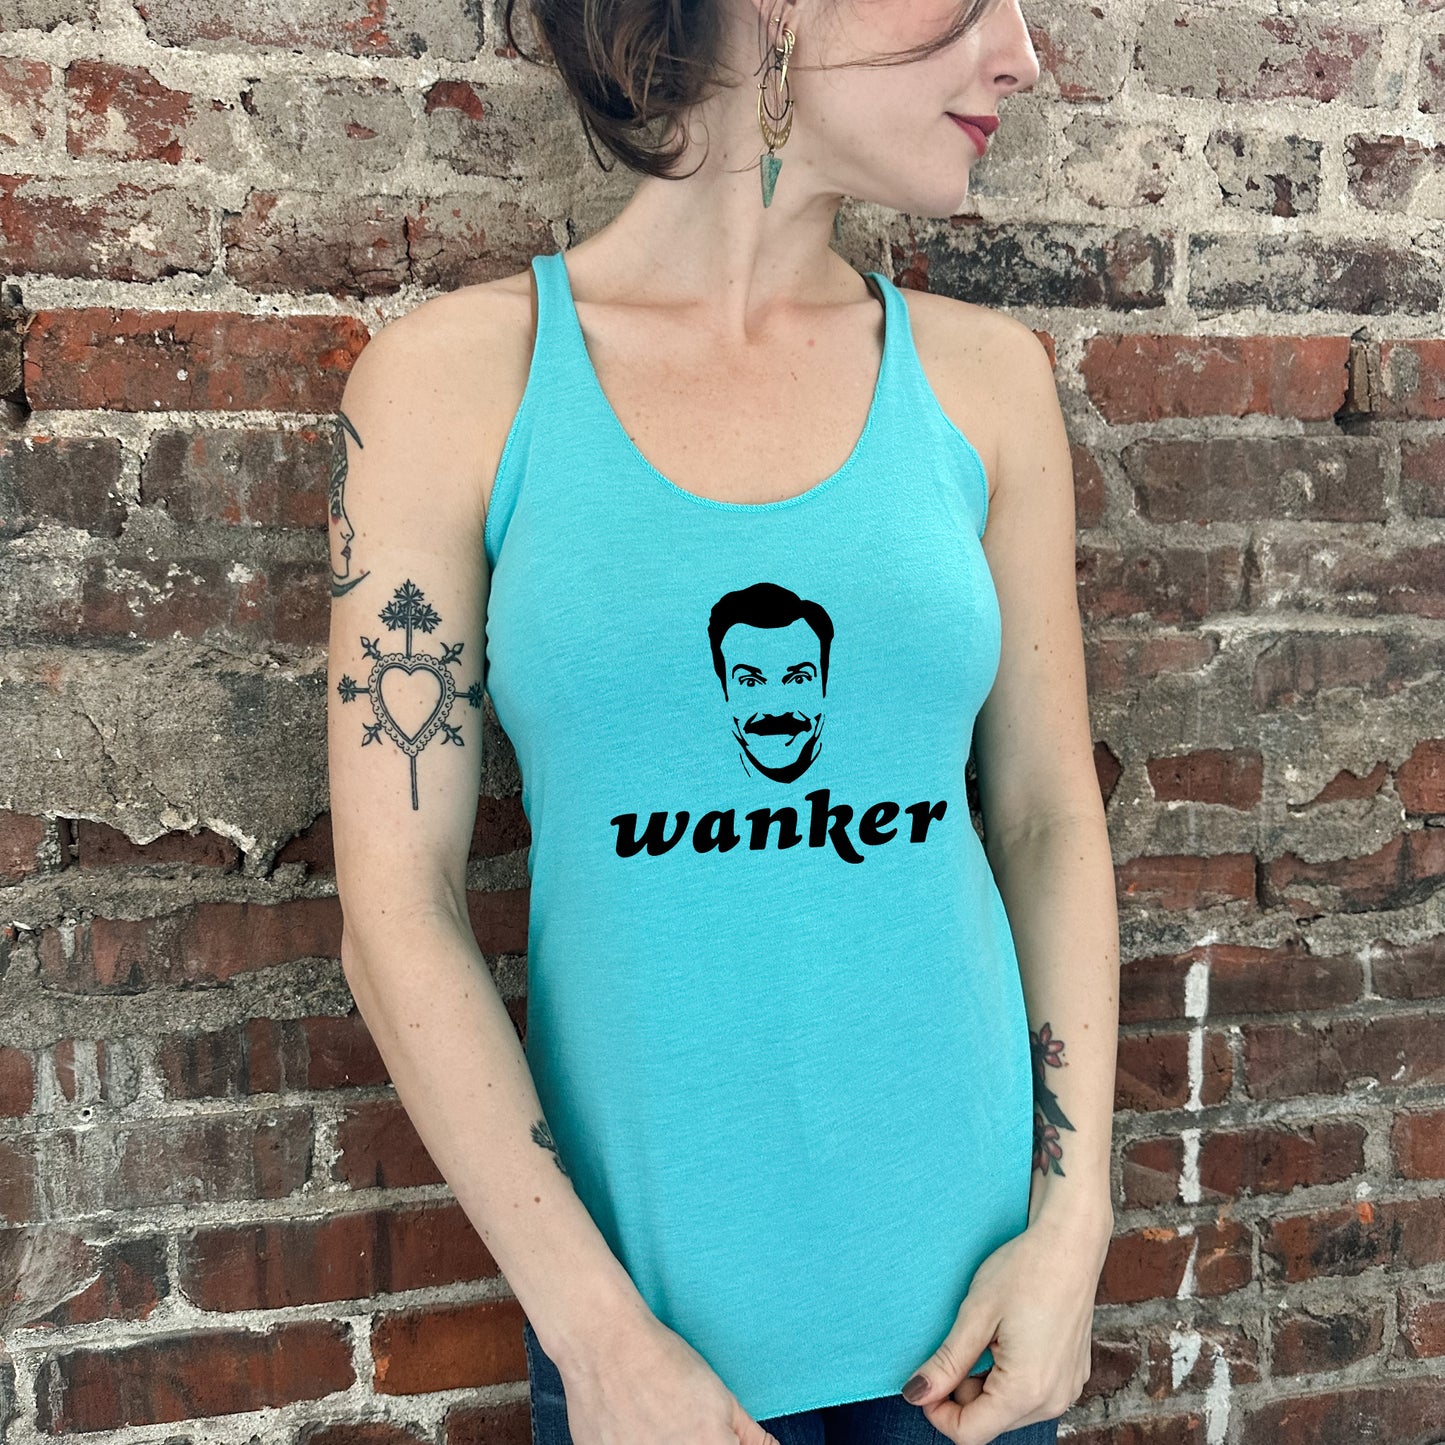 Wanker (Ted Lasso) - Women's Tank - Heather Gray, Tahiti, or Envy